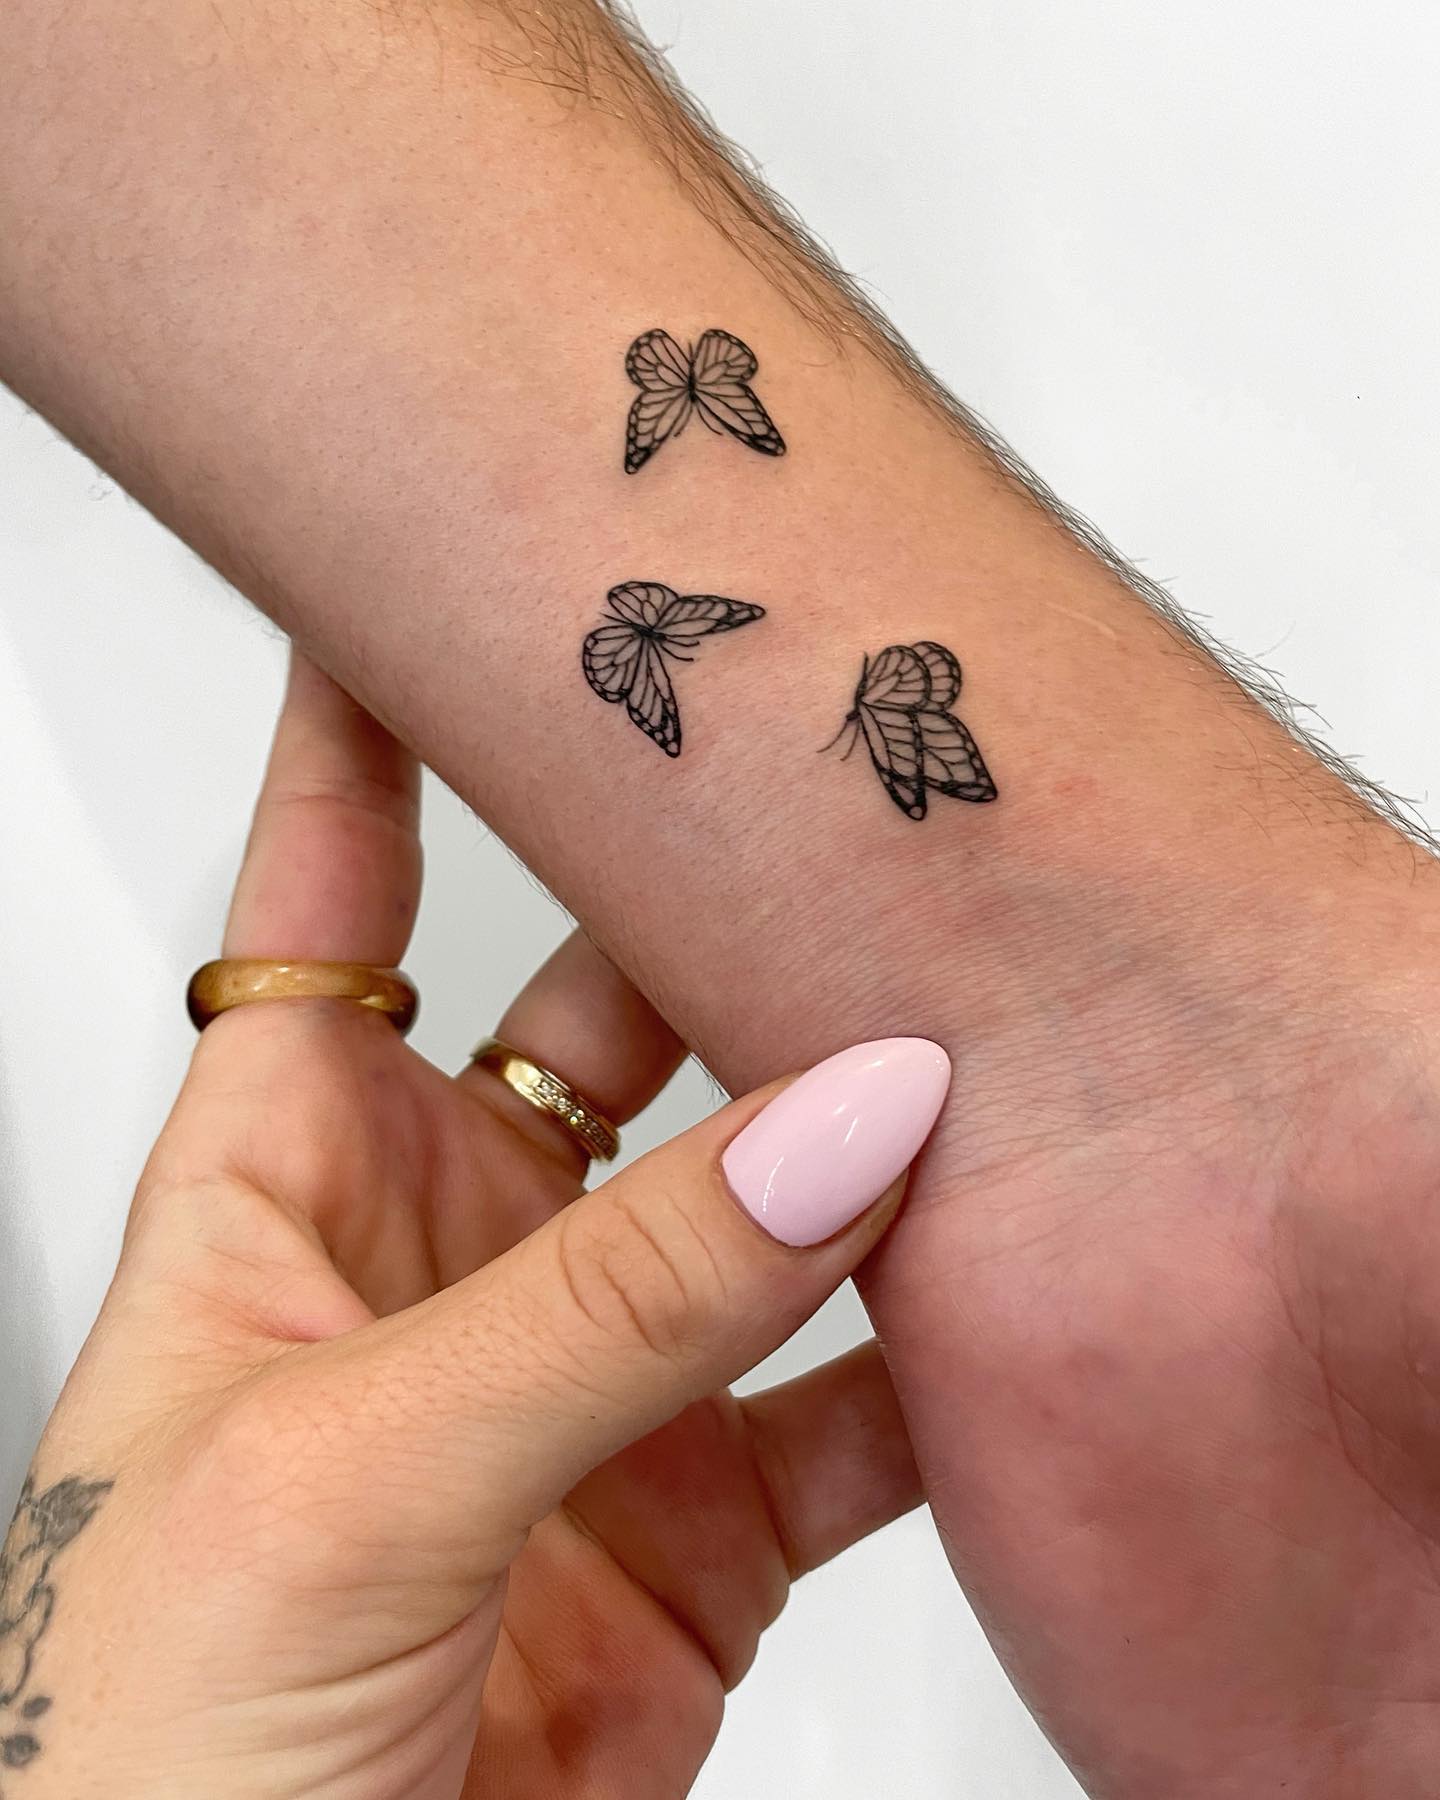 Water Transfer Tattoo Minimalist Small Sun Moon Tattoos Body Art Waterproof  Temporary Fake Tatto For Adults Couples Kid 10.5*6cm